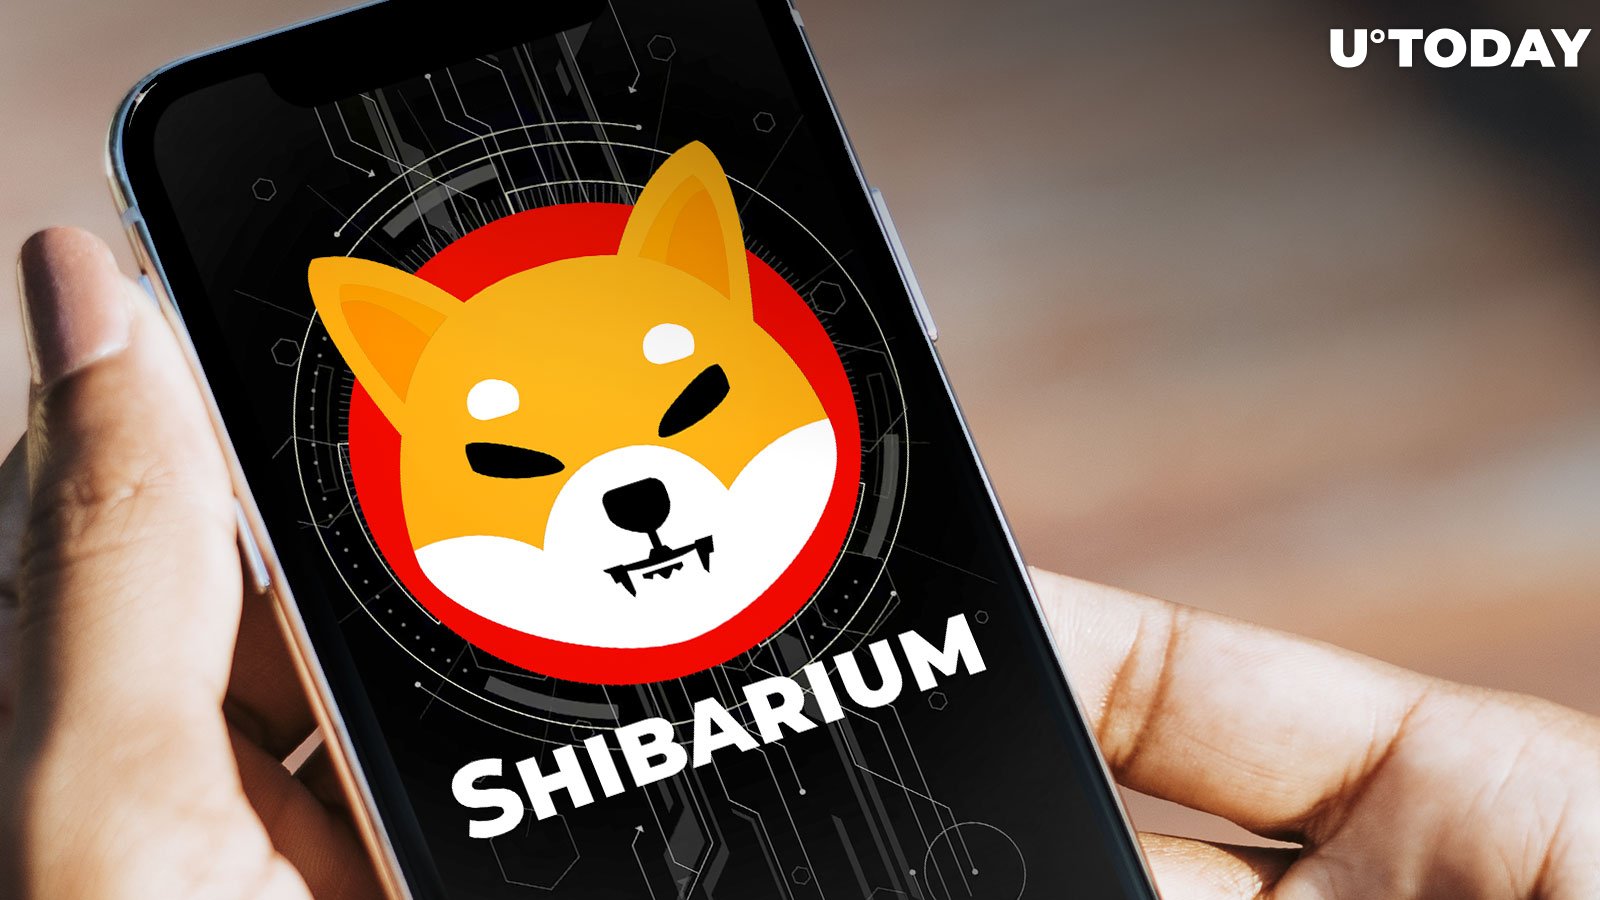 Lead Shiba Inu (SHIB) Developer Unveils Plans for Revolutionary Shibarium Platform